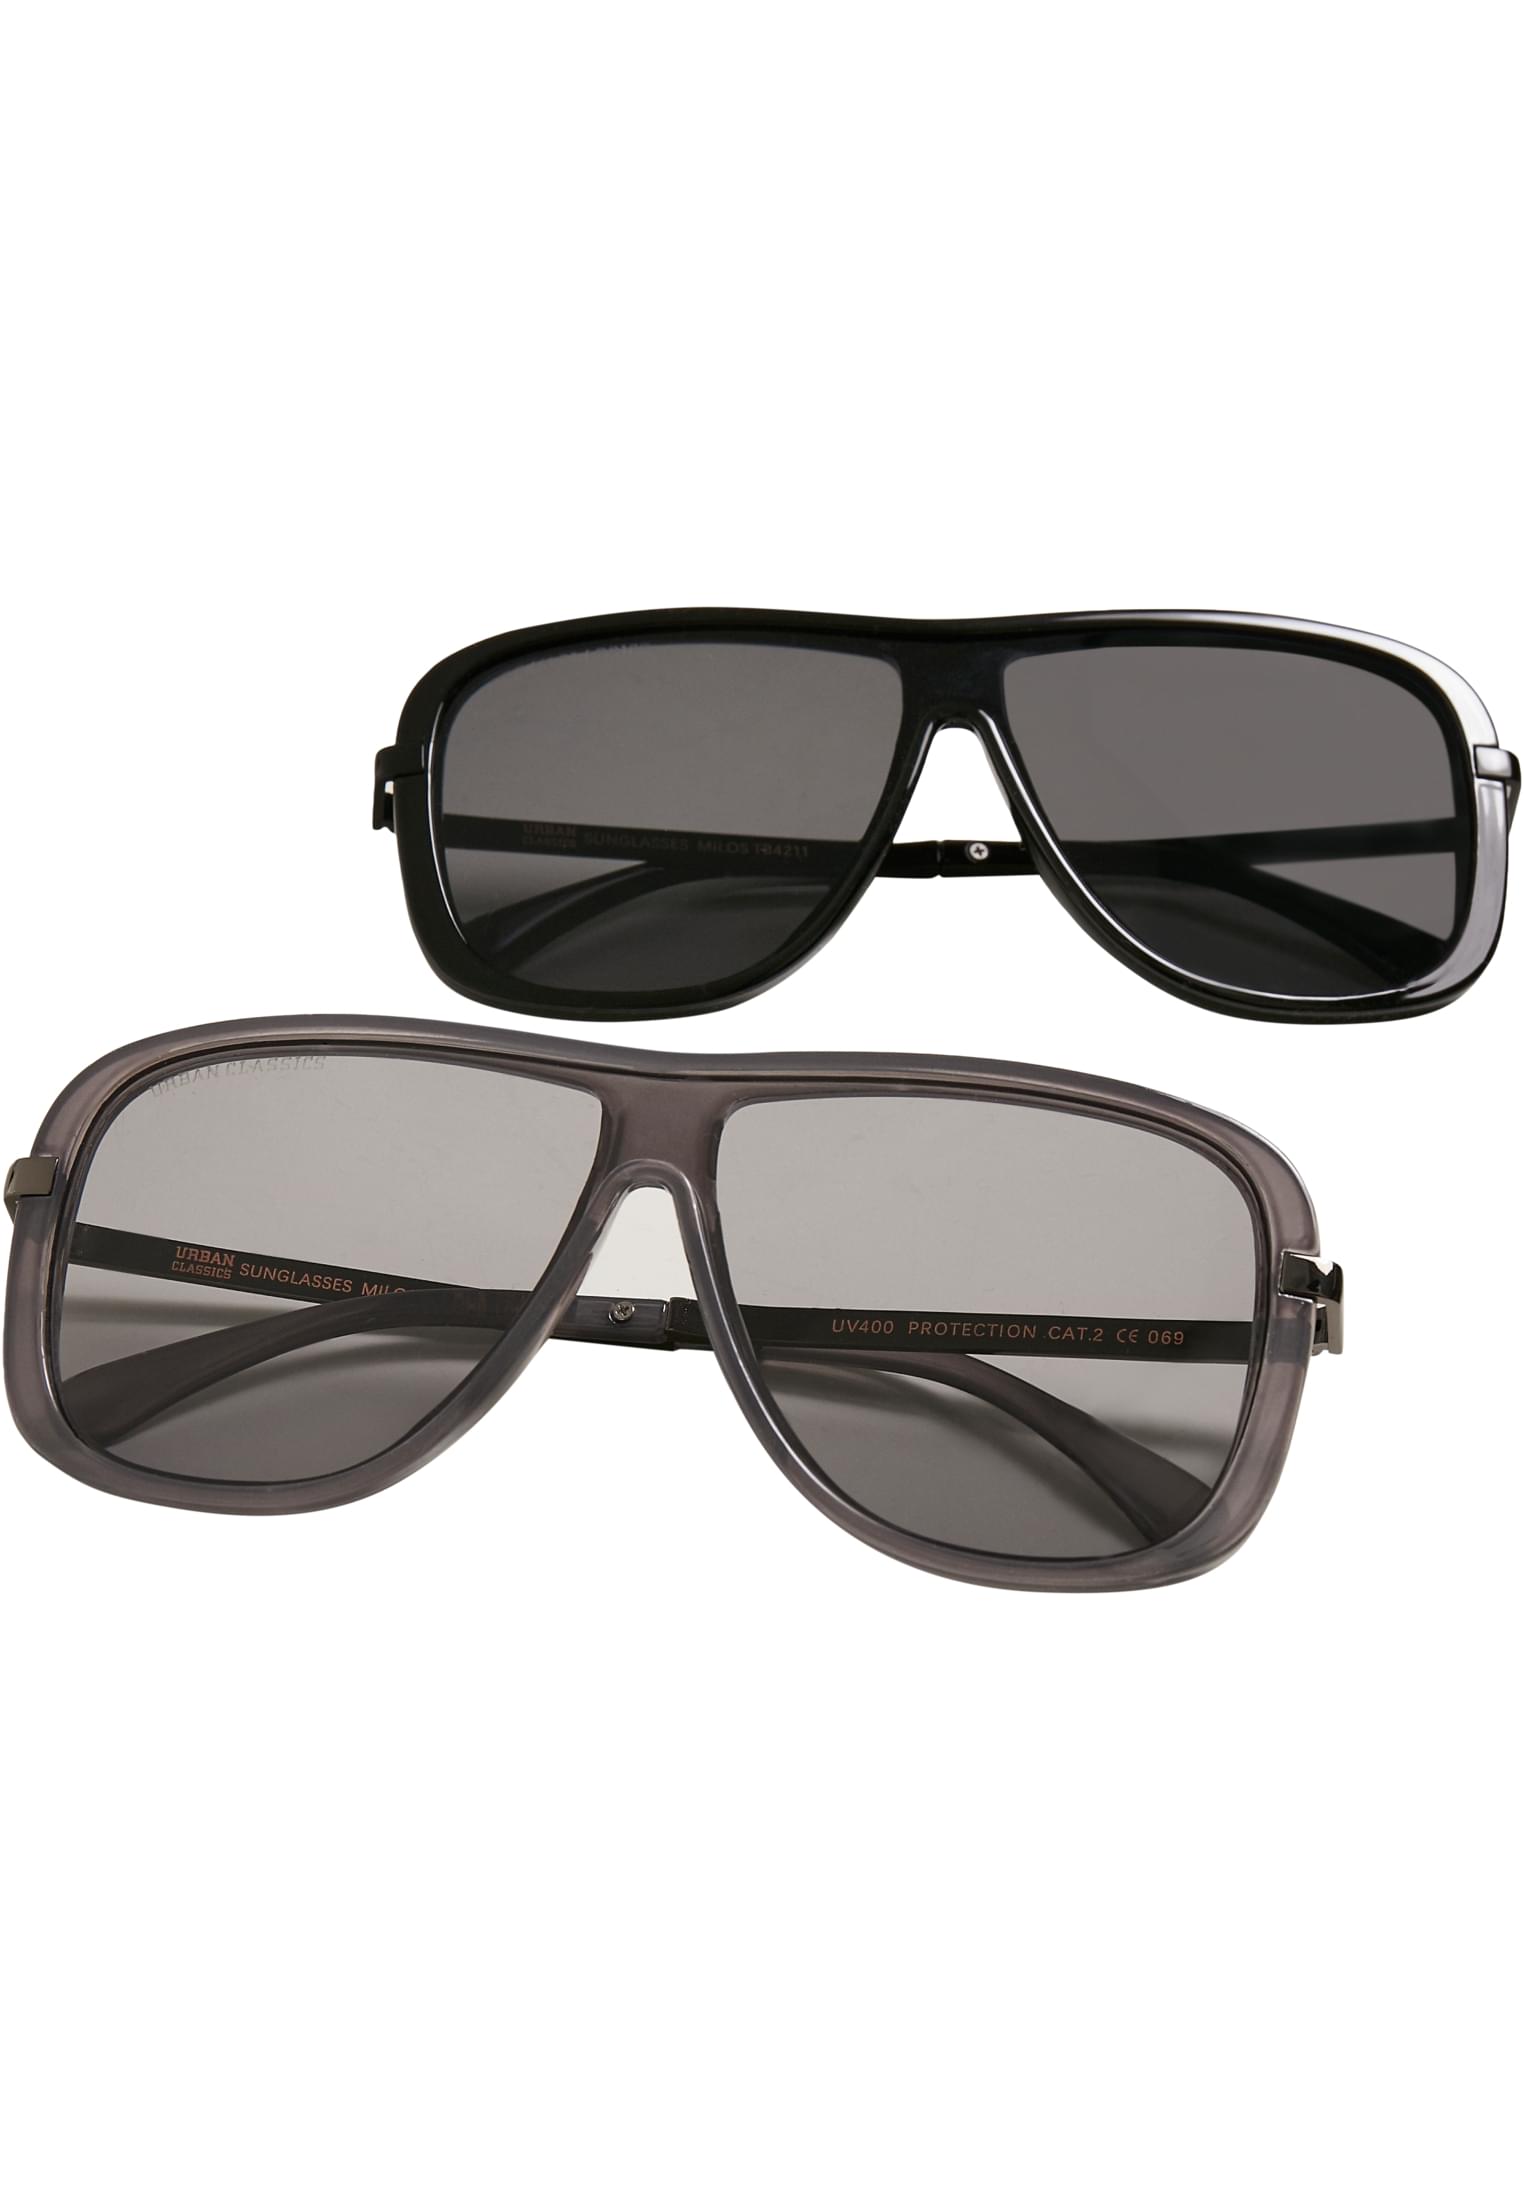 Milos 2-Pack Sunglasses Black/Black+Grey/Grey